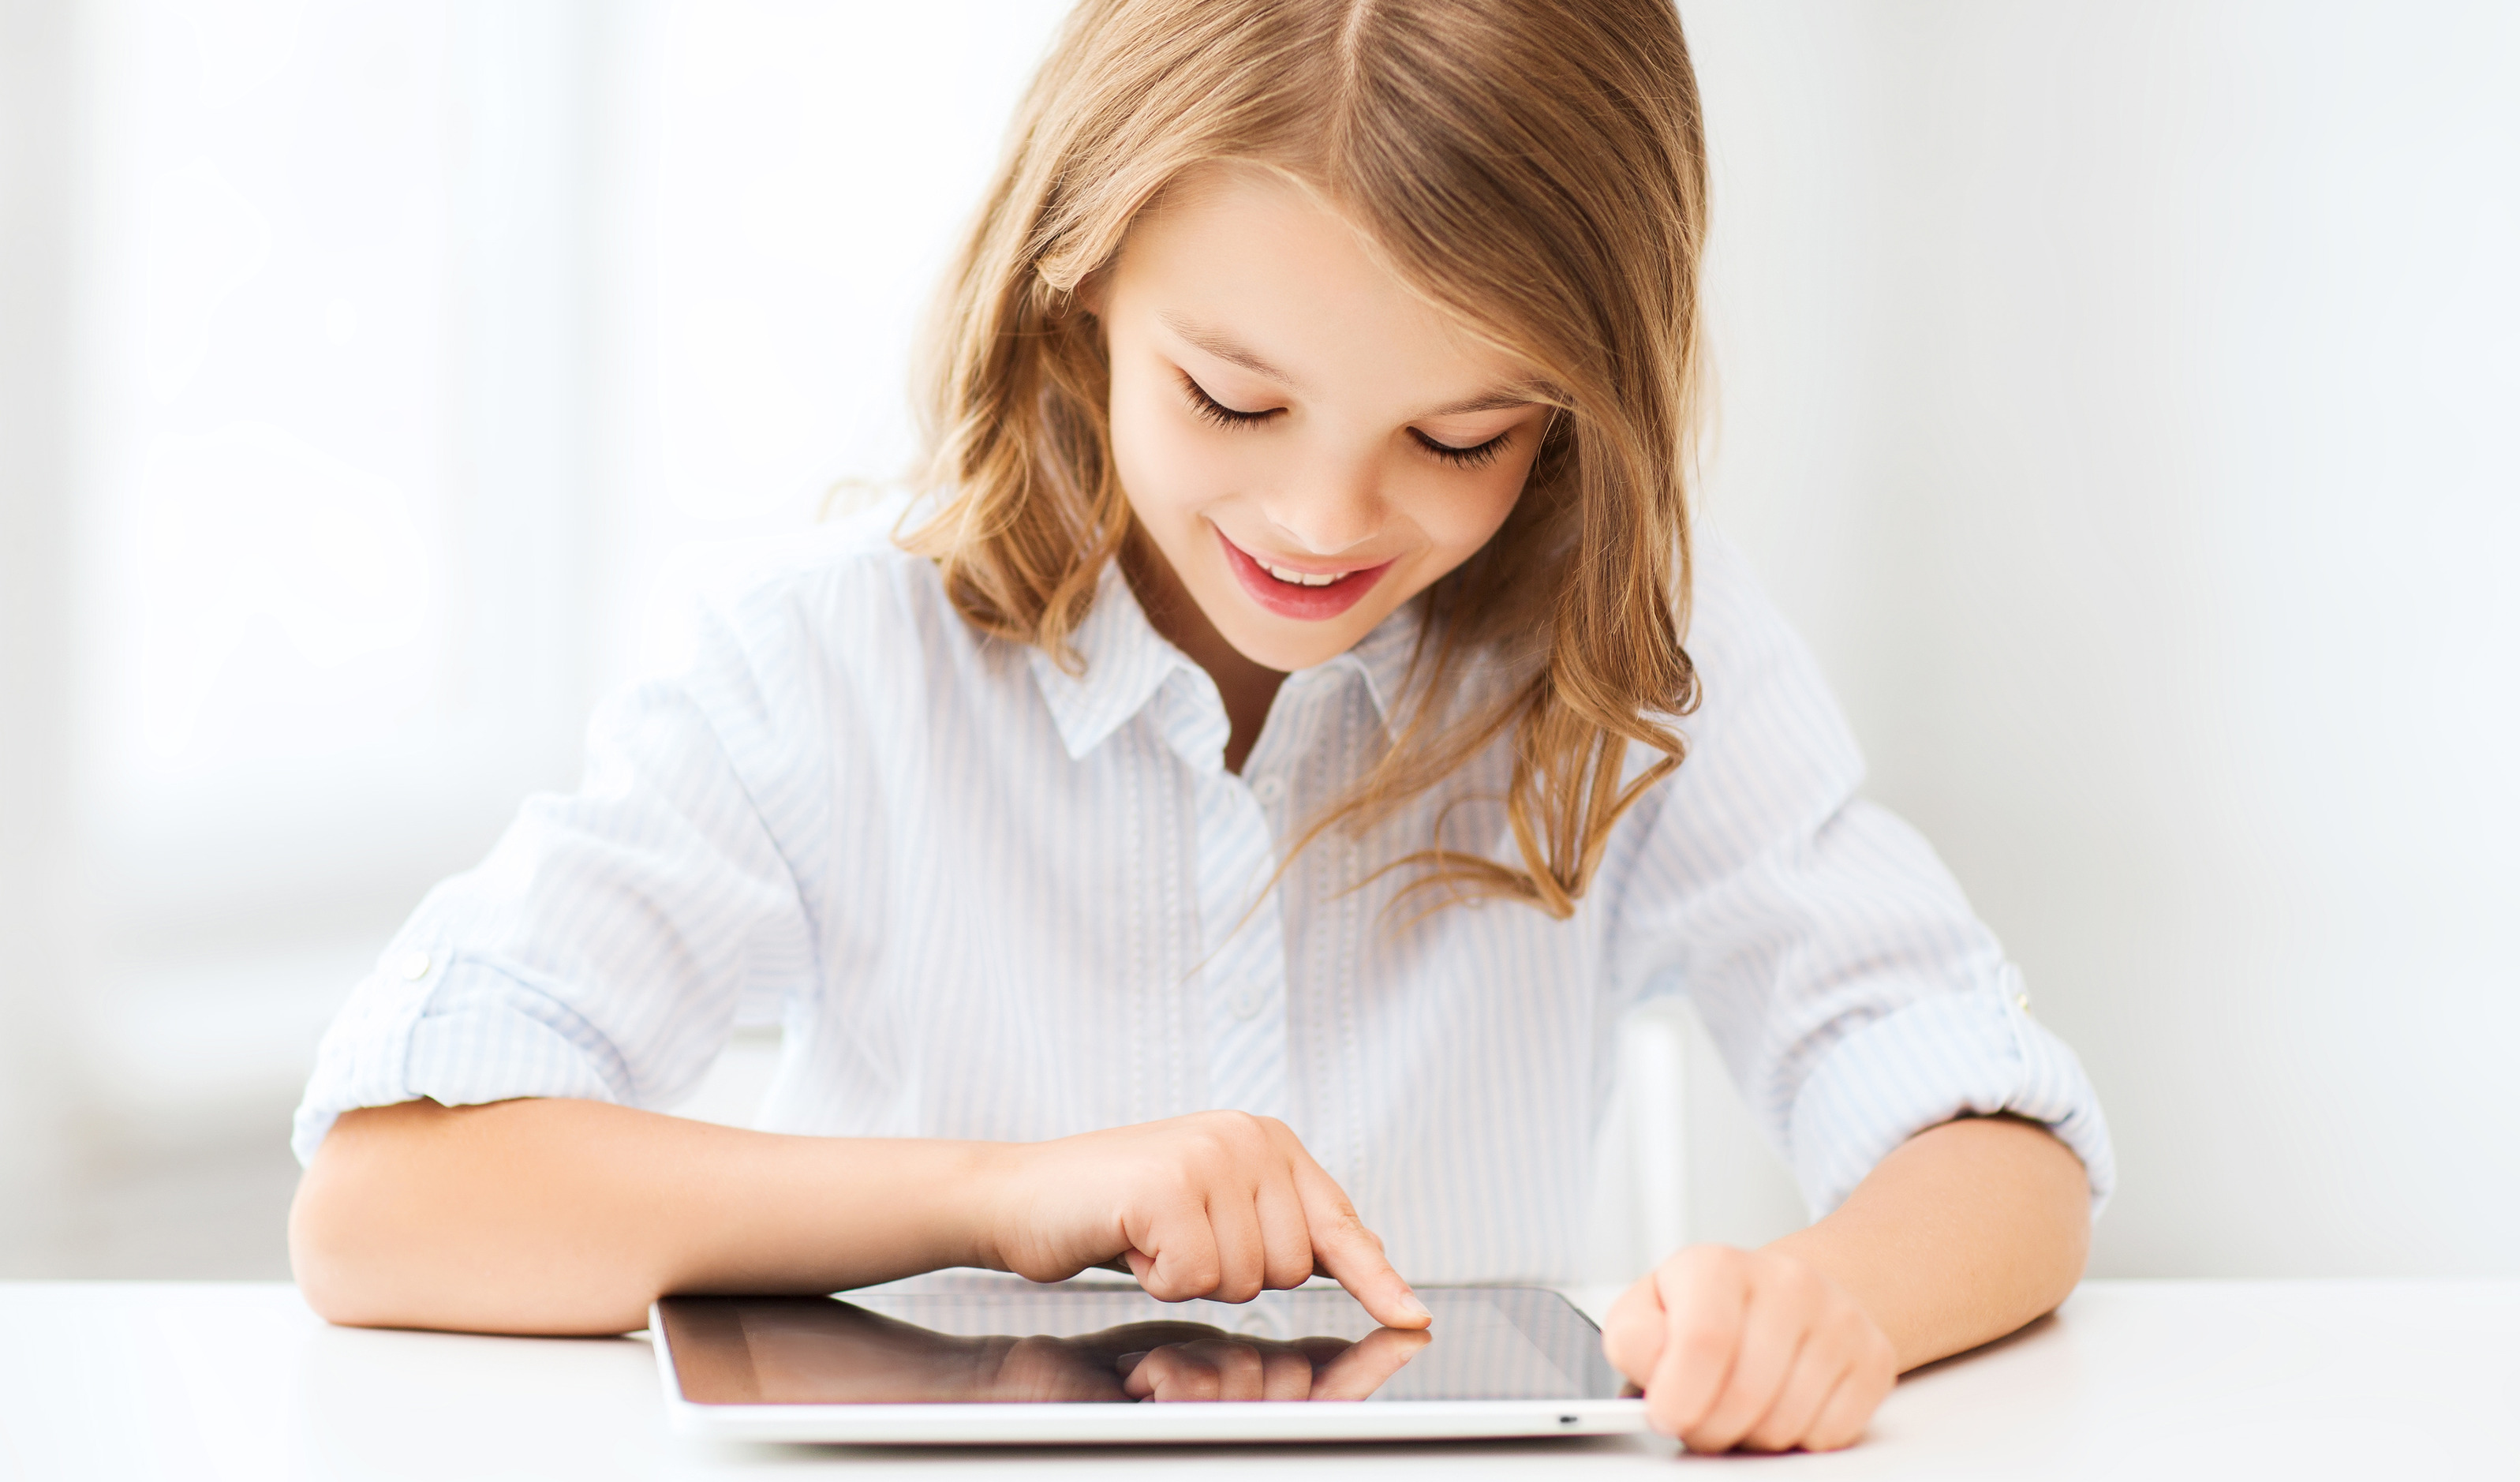 girl in school uniform on tablet